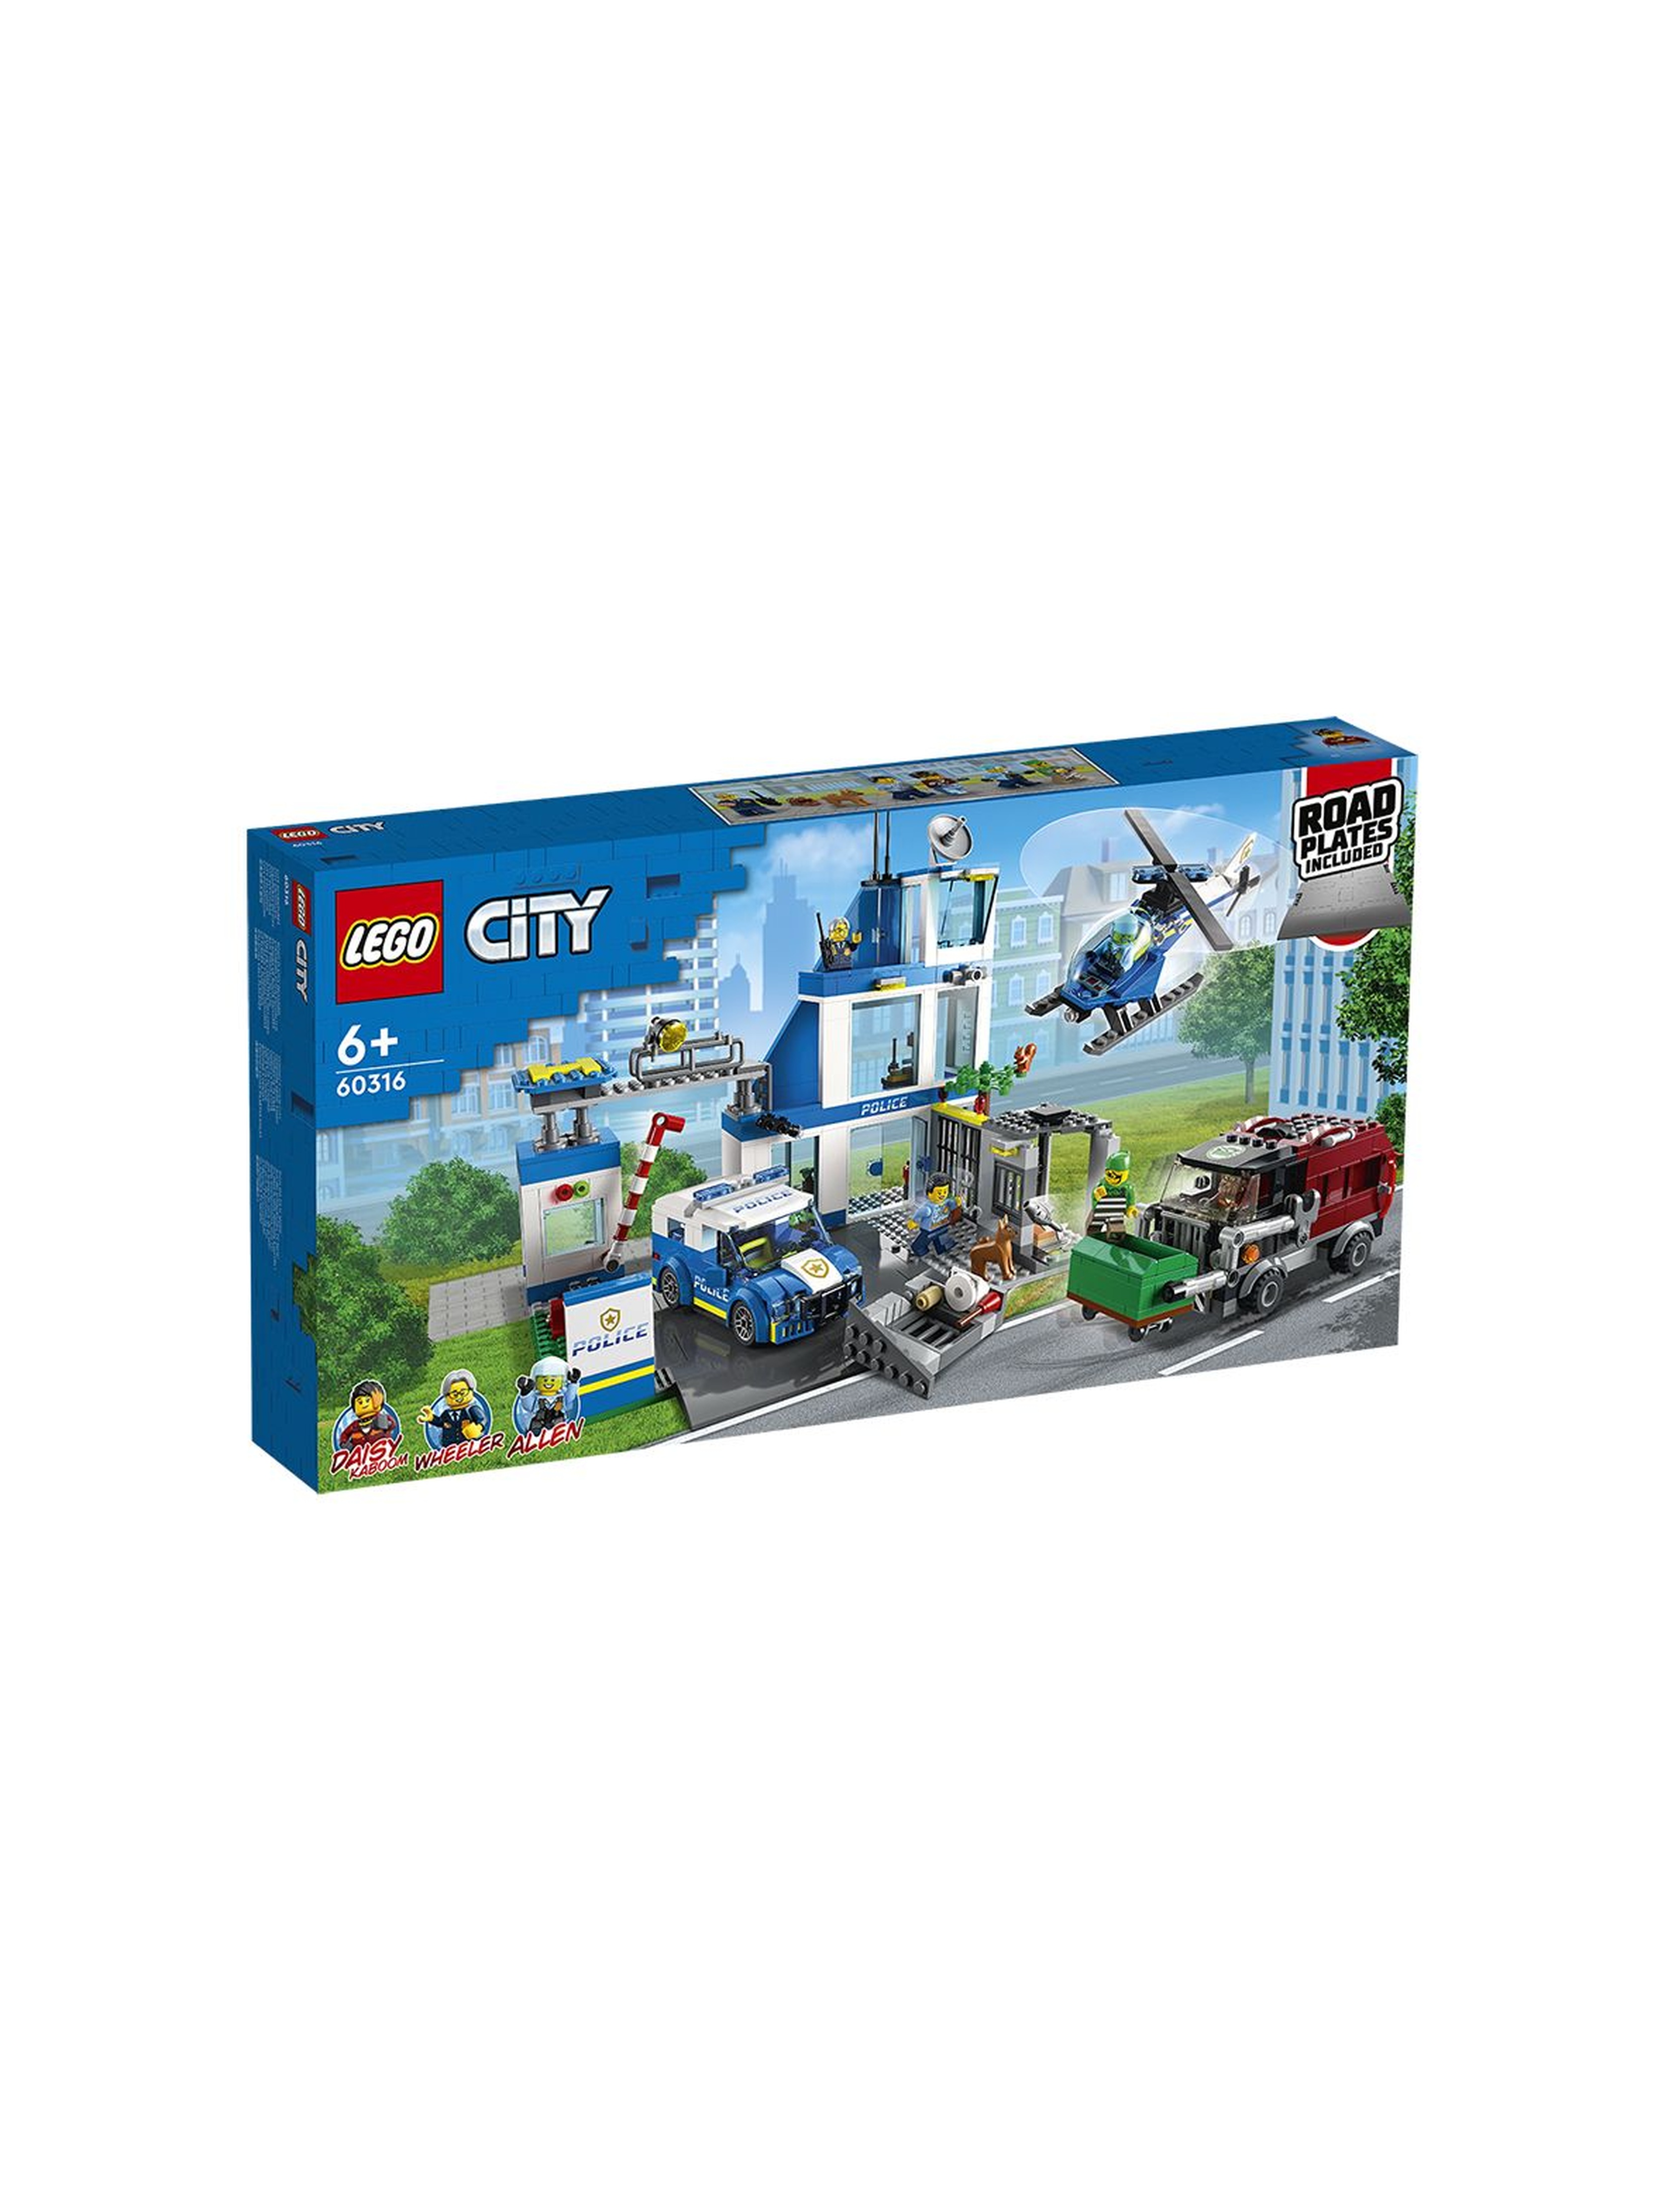 LEGO City 60316 Posterunek policji 668el